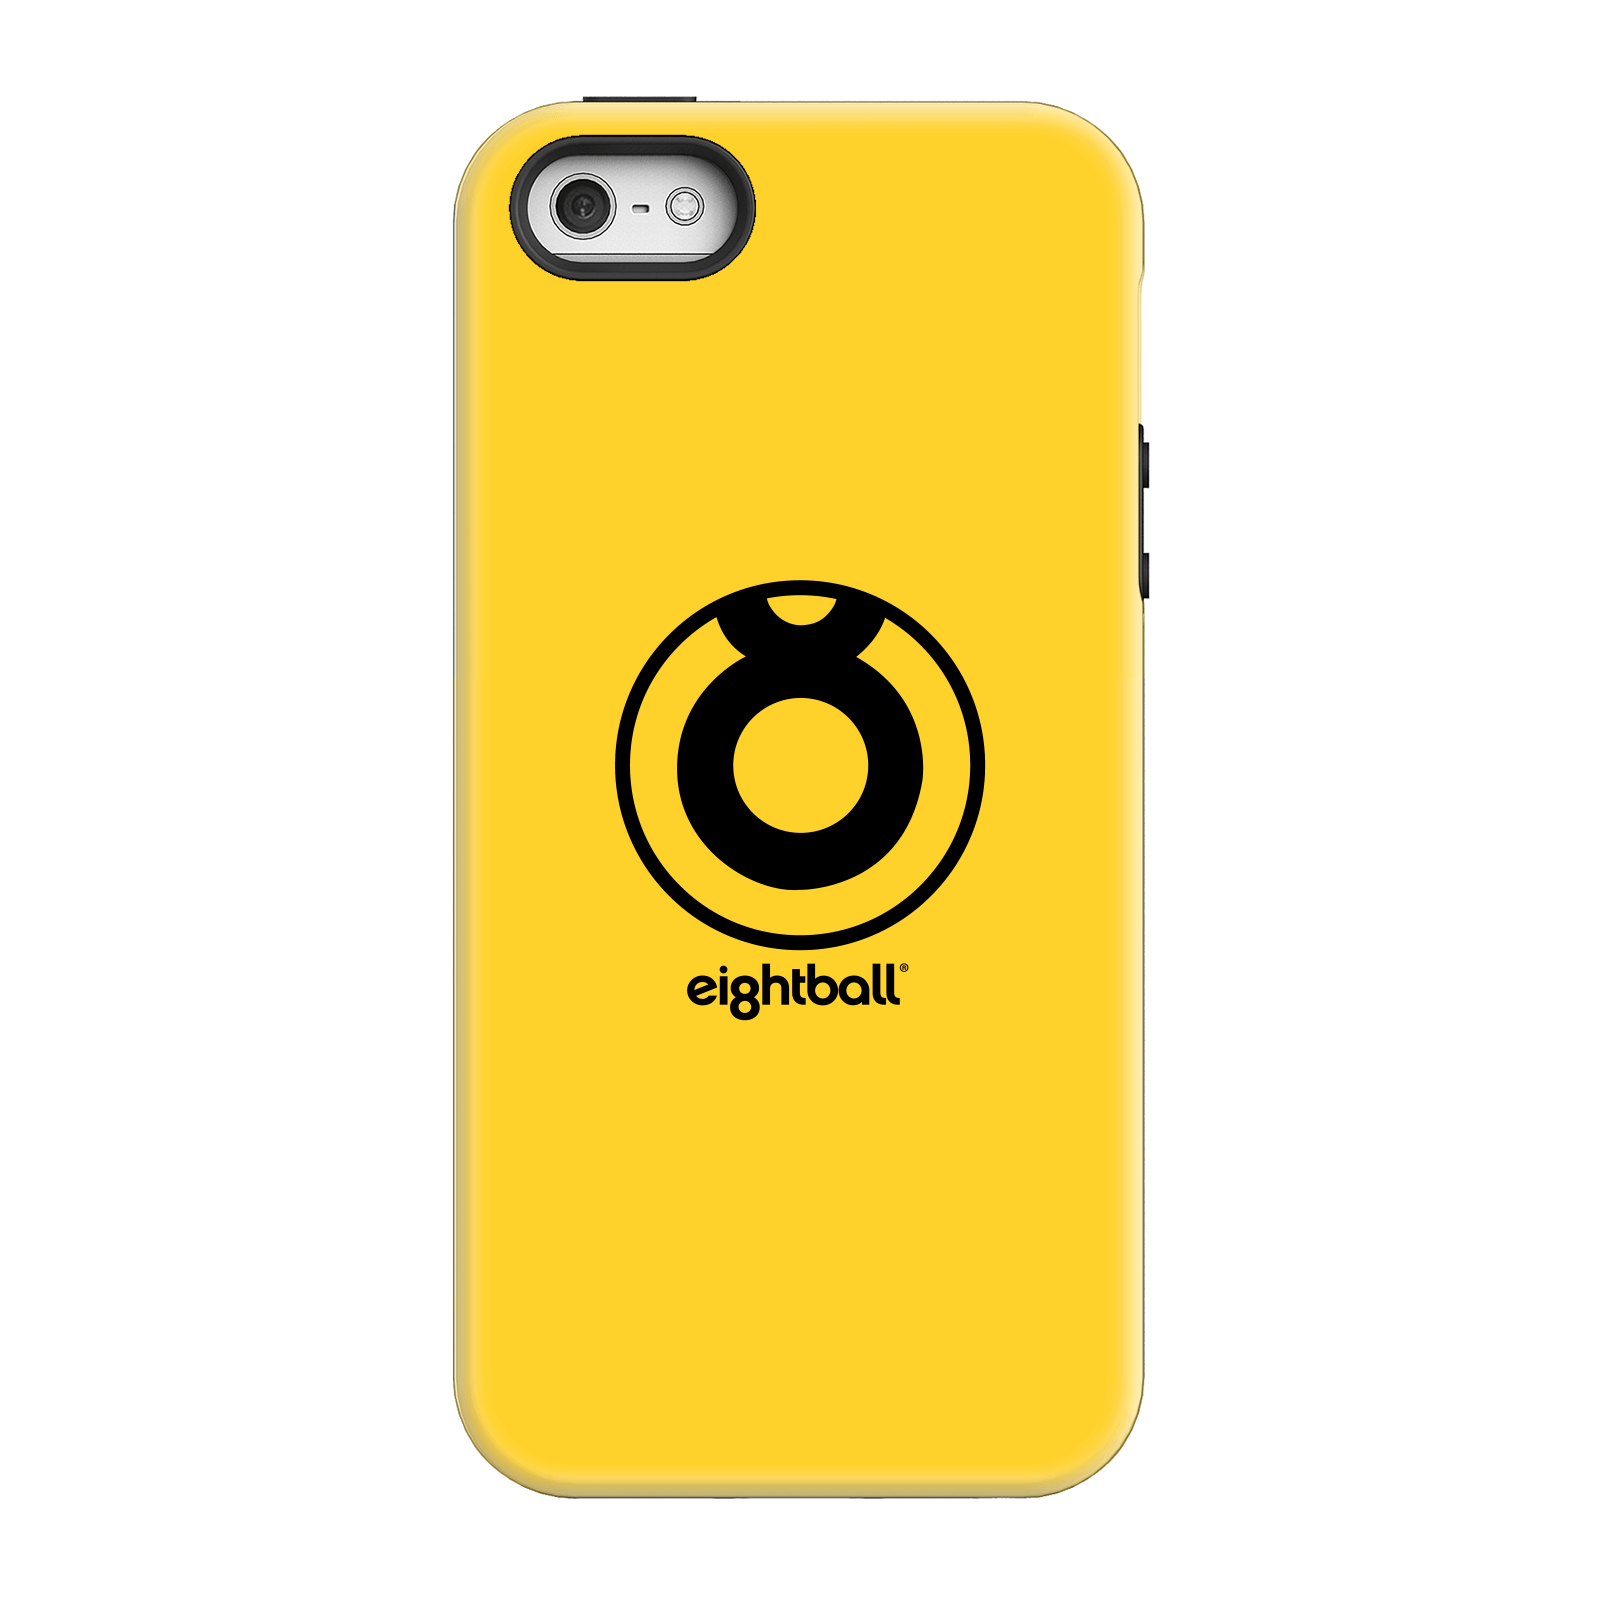 Funda Móvil Ei8htball Large Circle Logo para iPhone y Android - iPhone 5/5s - Carcasa doble capa - Mate